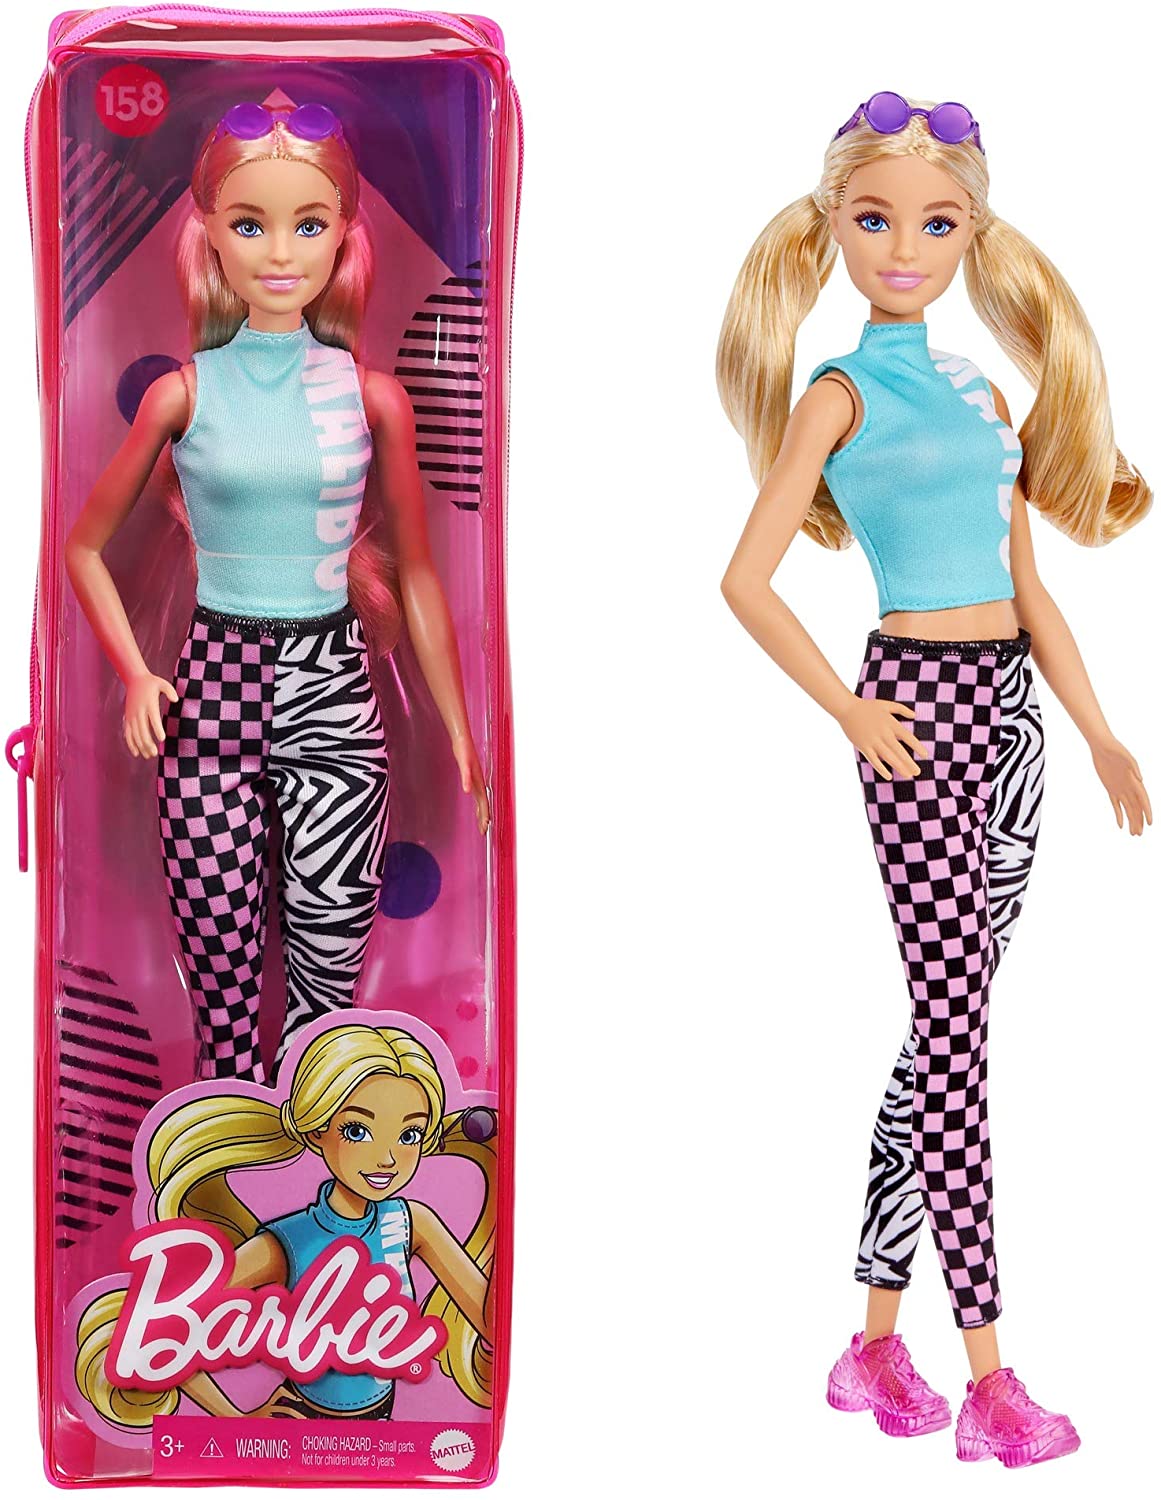 Barbie: Fashionistas Doll Assortment